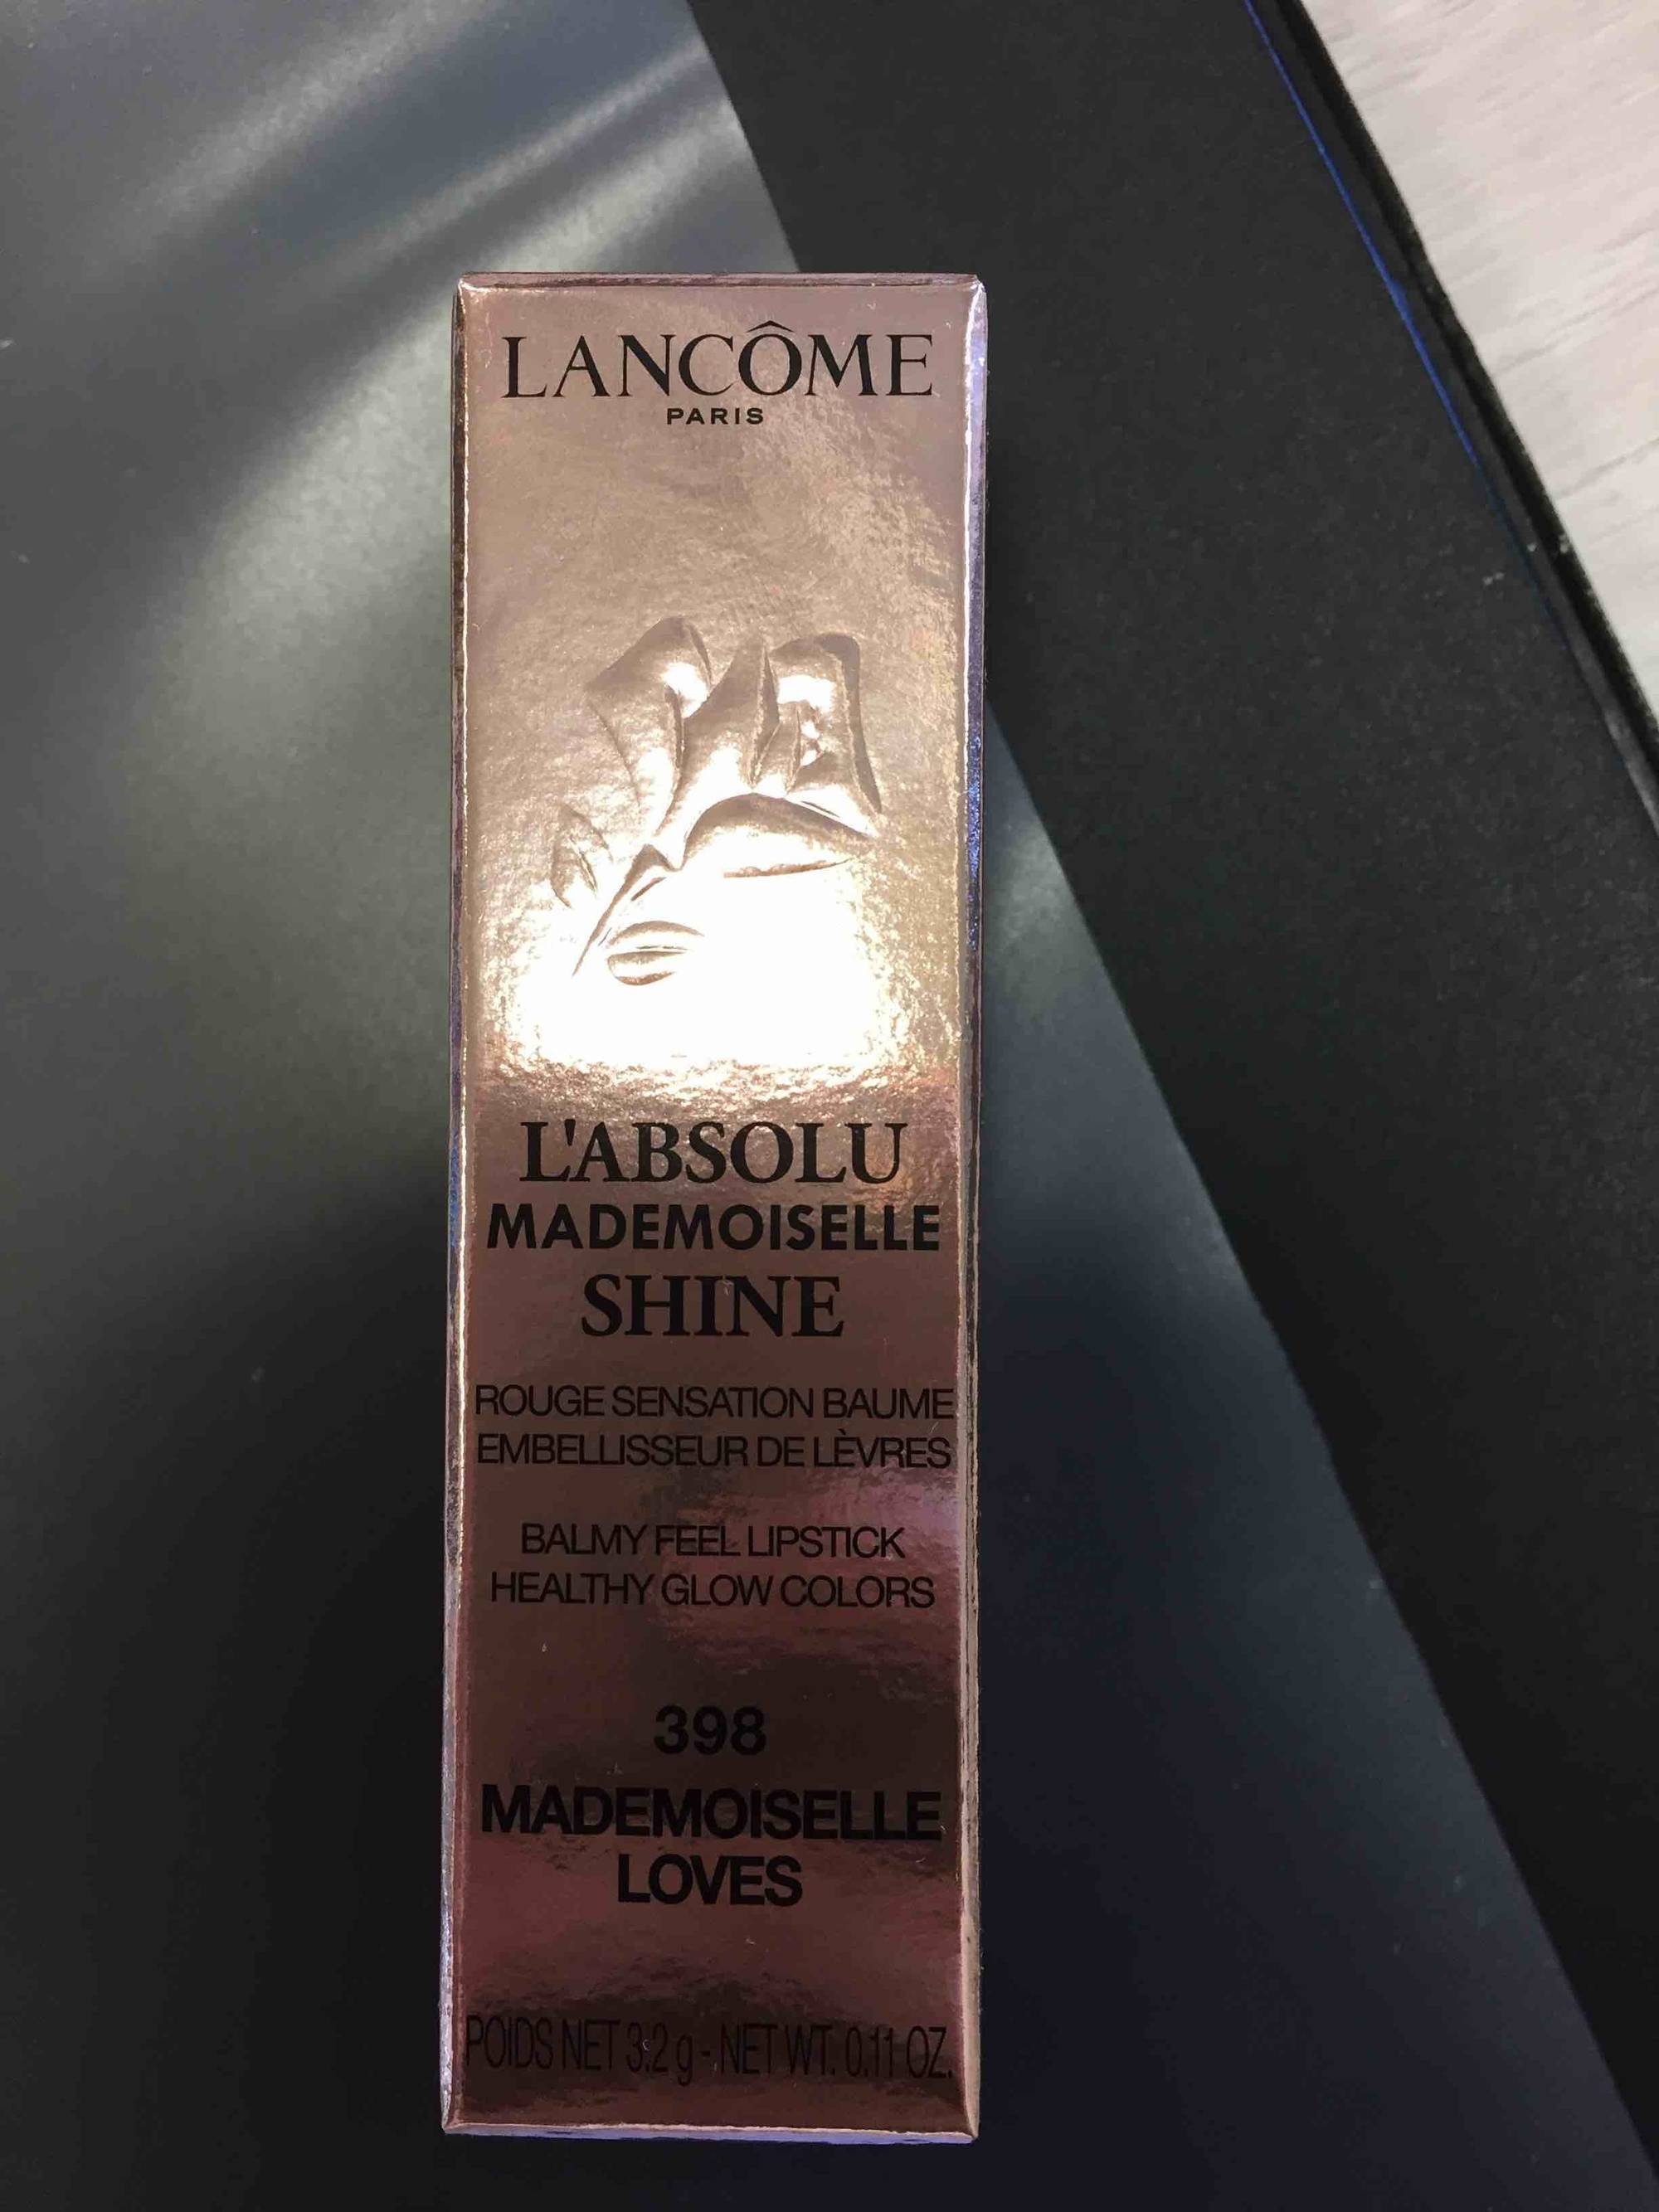 LANCÔME - L'absolu mademoiselle shine - Rouge sensation baume